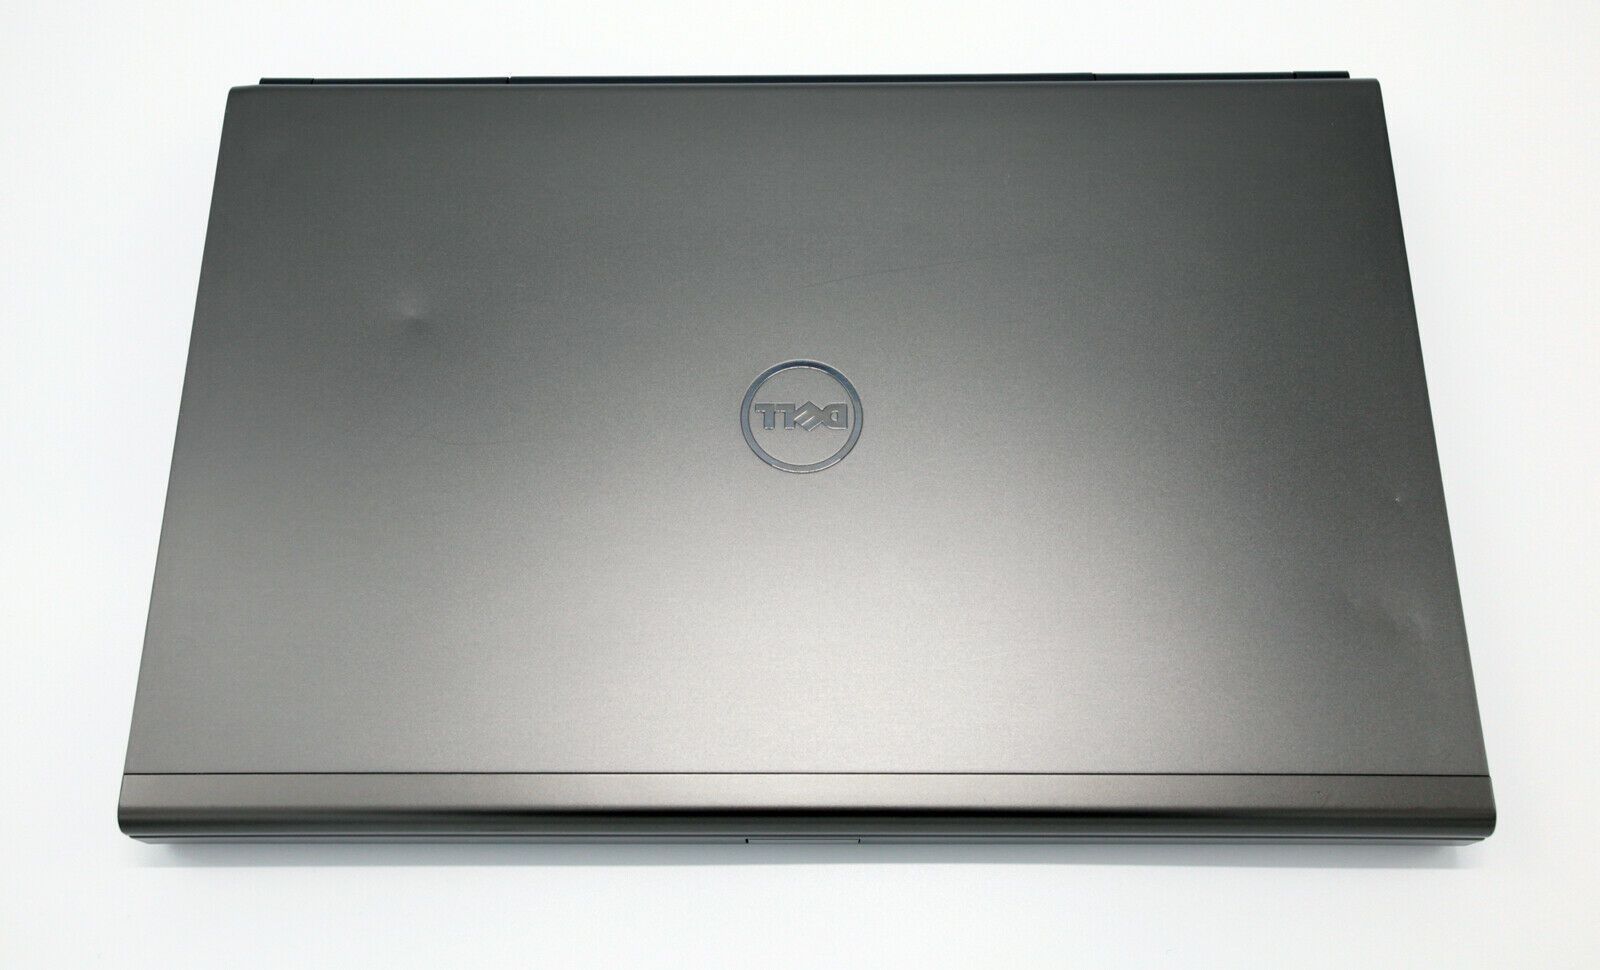 Dell Precision M6700 CAD Laptop: Core i7, Quadro K4000M, 480GB +HDD VAT Warranty - CruiseTech